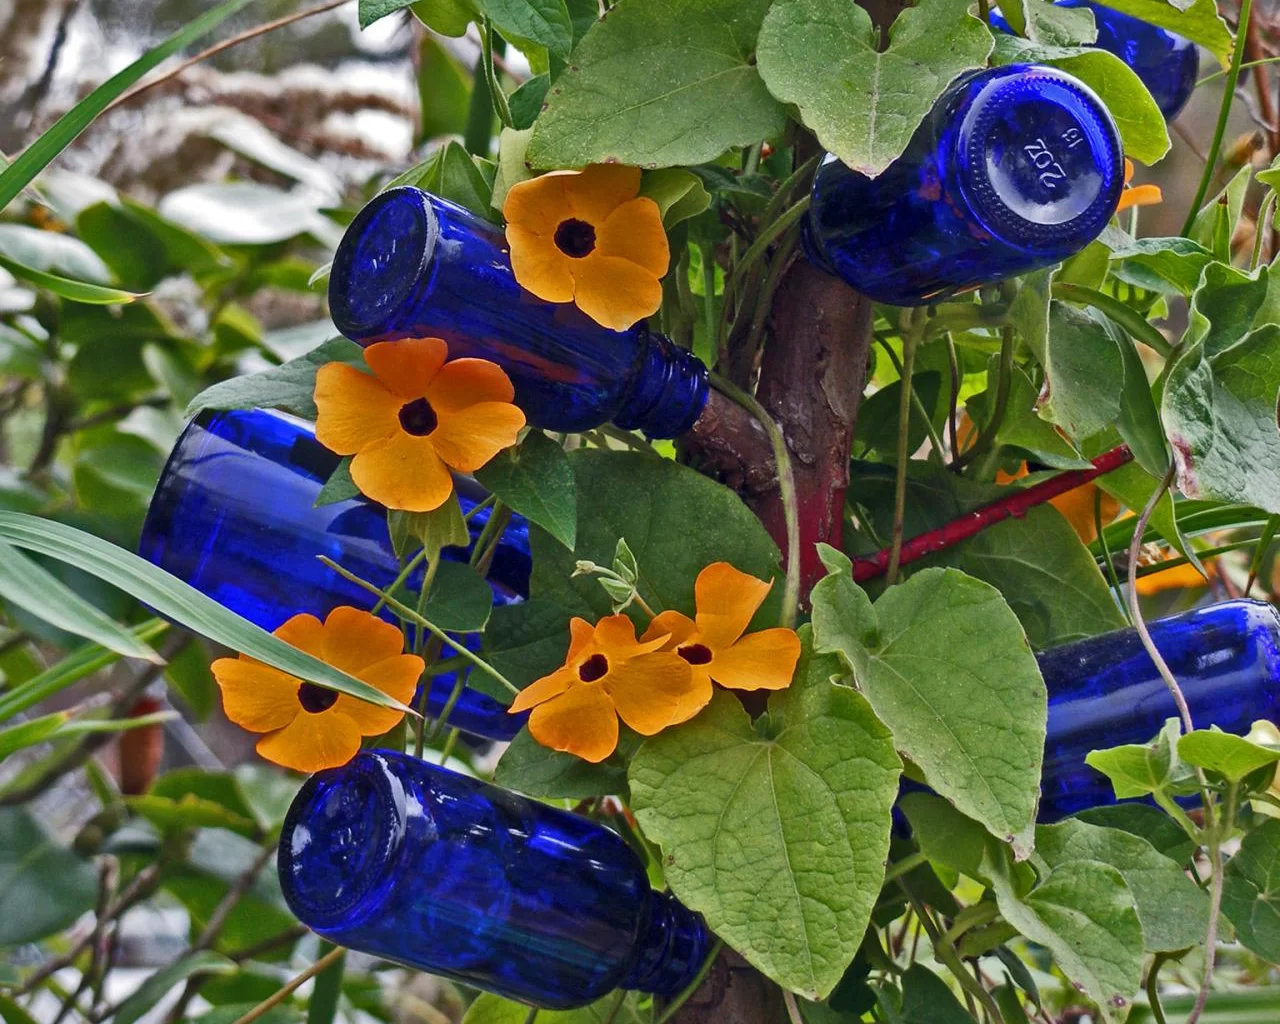 DIY Bottle Tree Sculpture for Your Garden or Yard